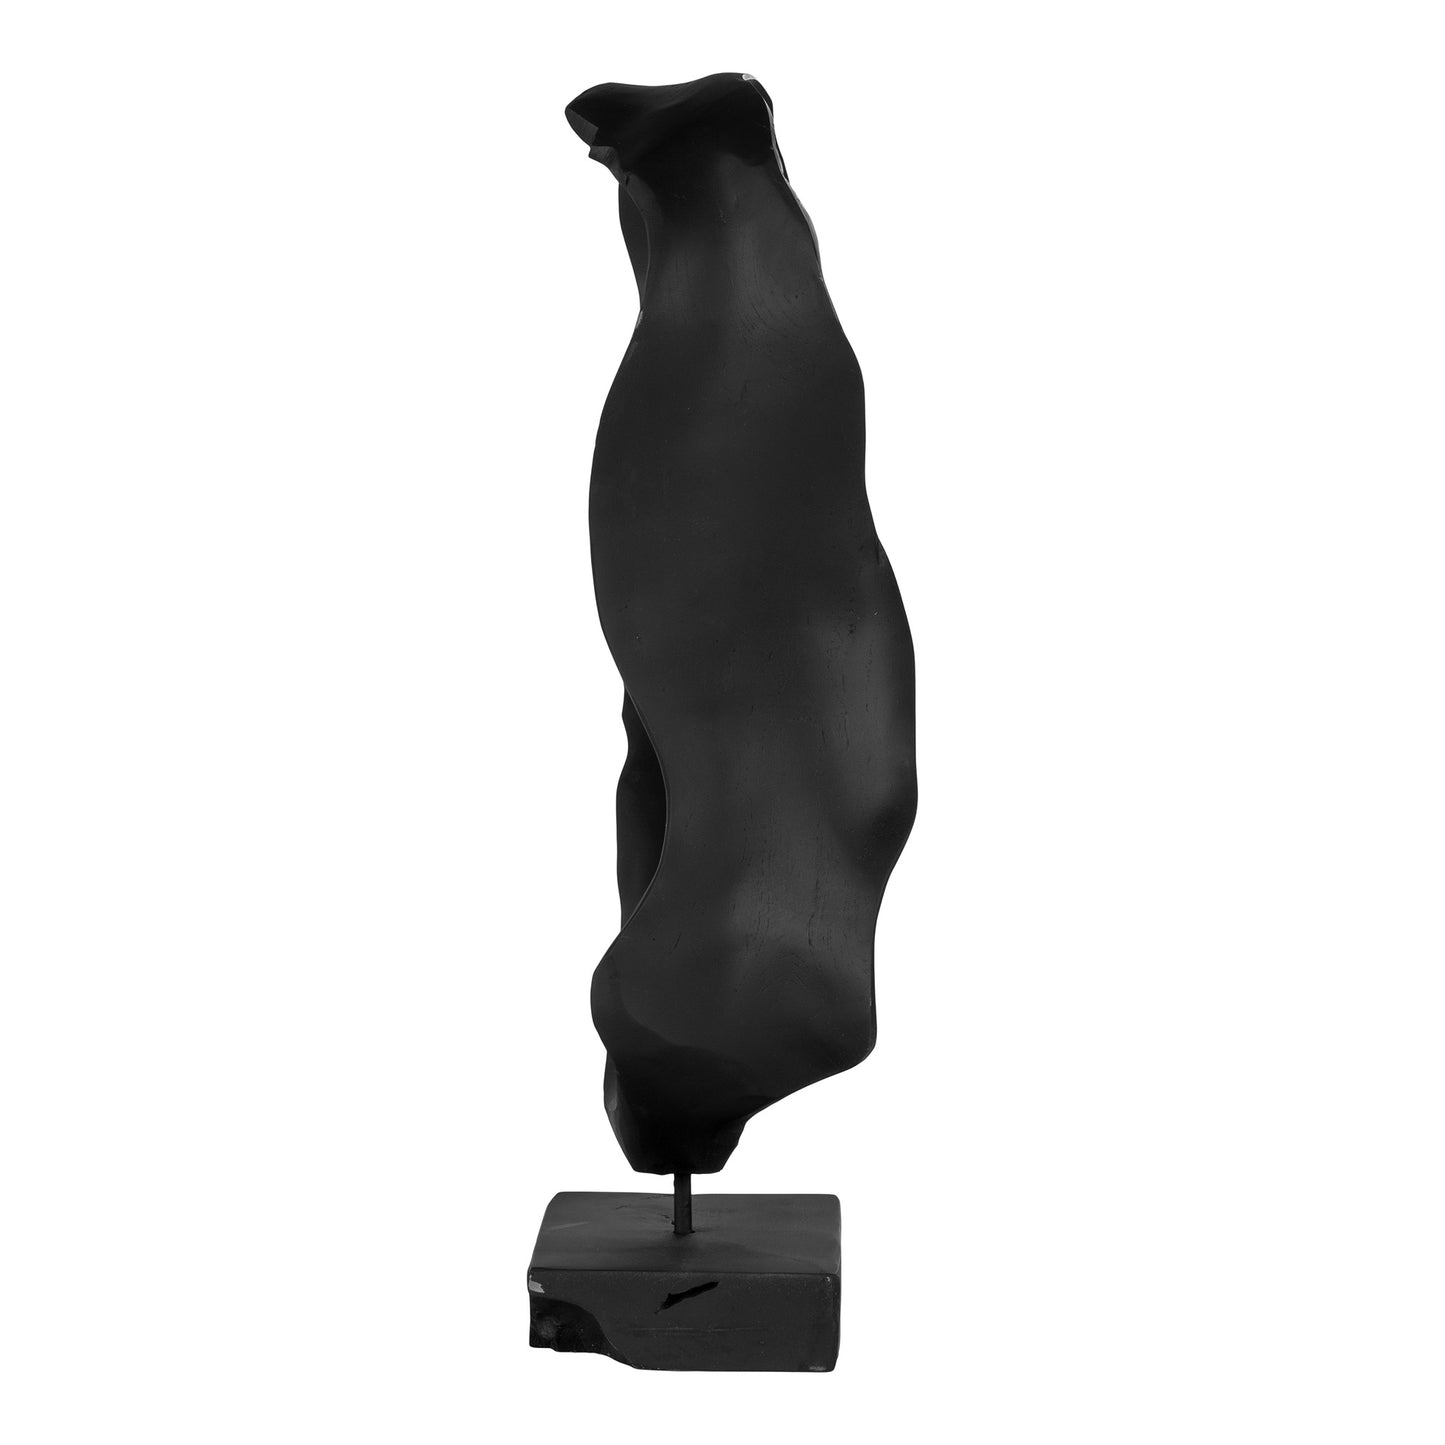 Donato Skulptur - Skulptur i sort teak 30x20x60 cm